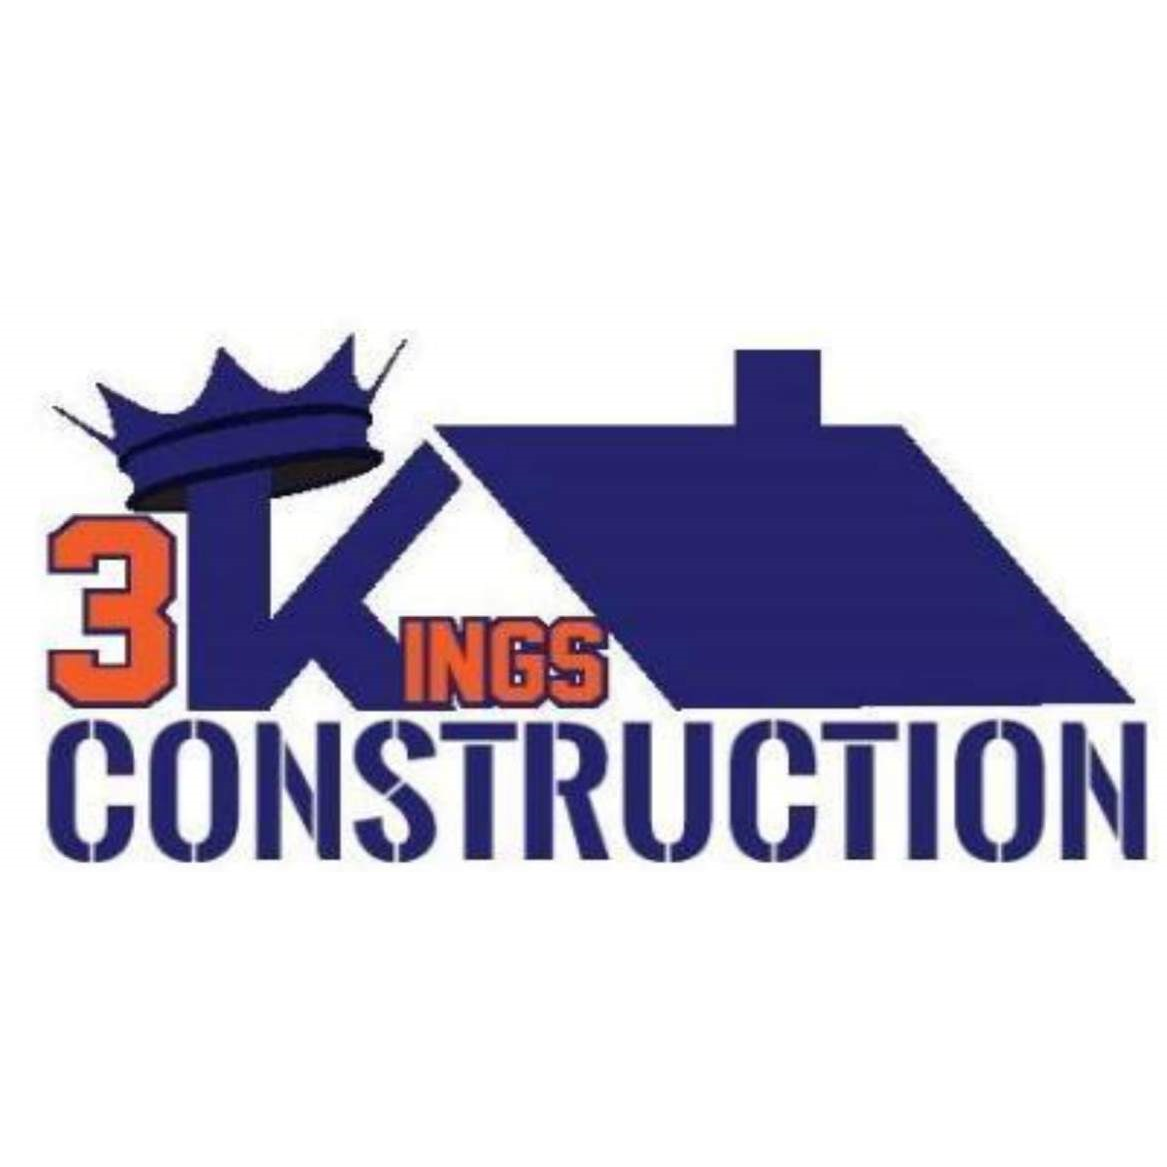 3 Kings Construction Logo